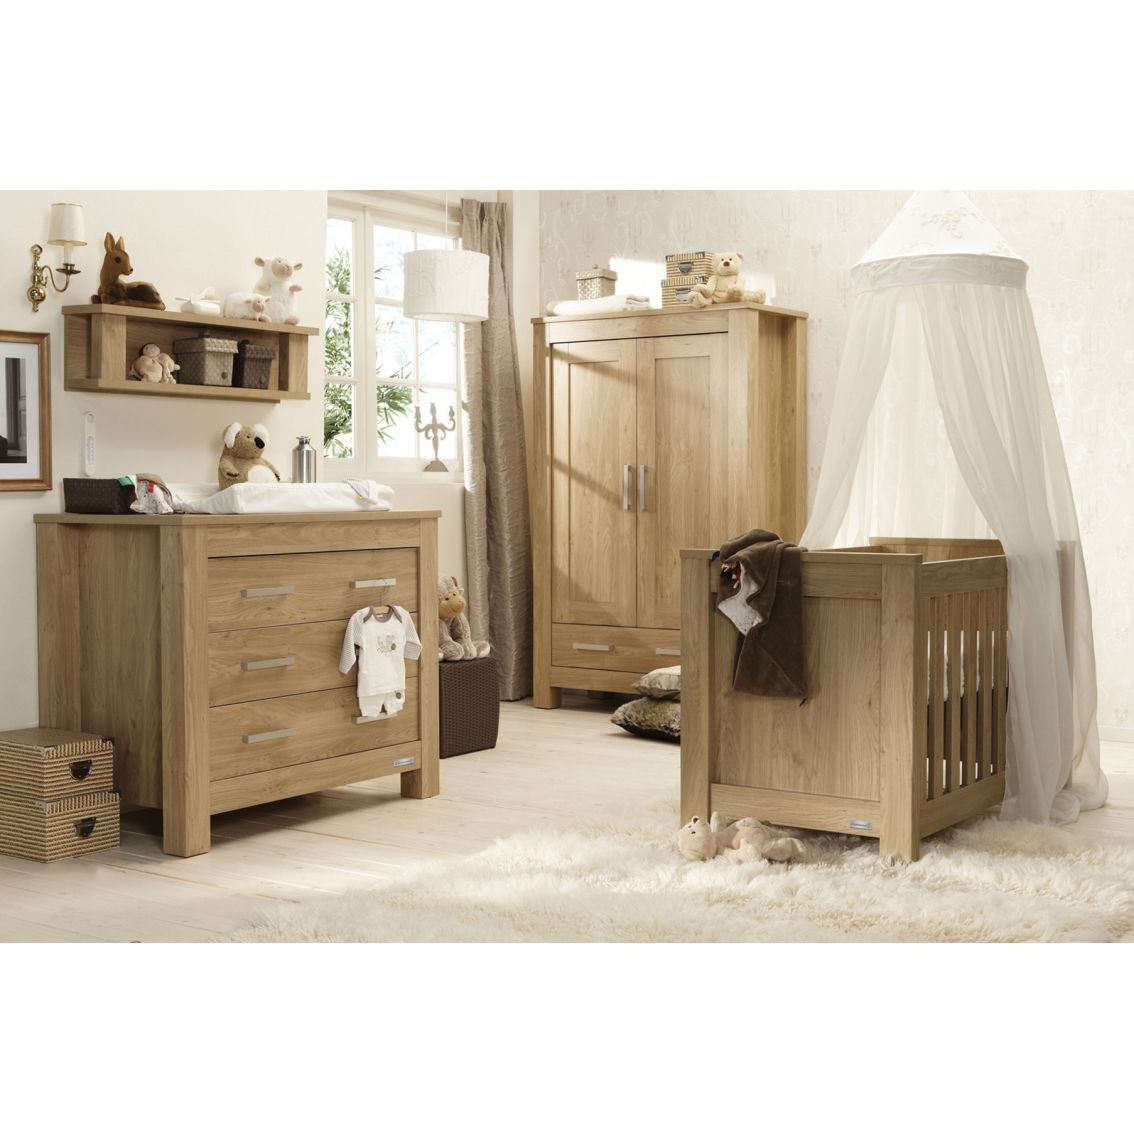 Babystyle Bordeaux Furniture + FREE Sprung Mattress - 3 Piece Room Set